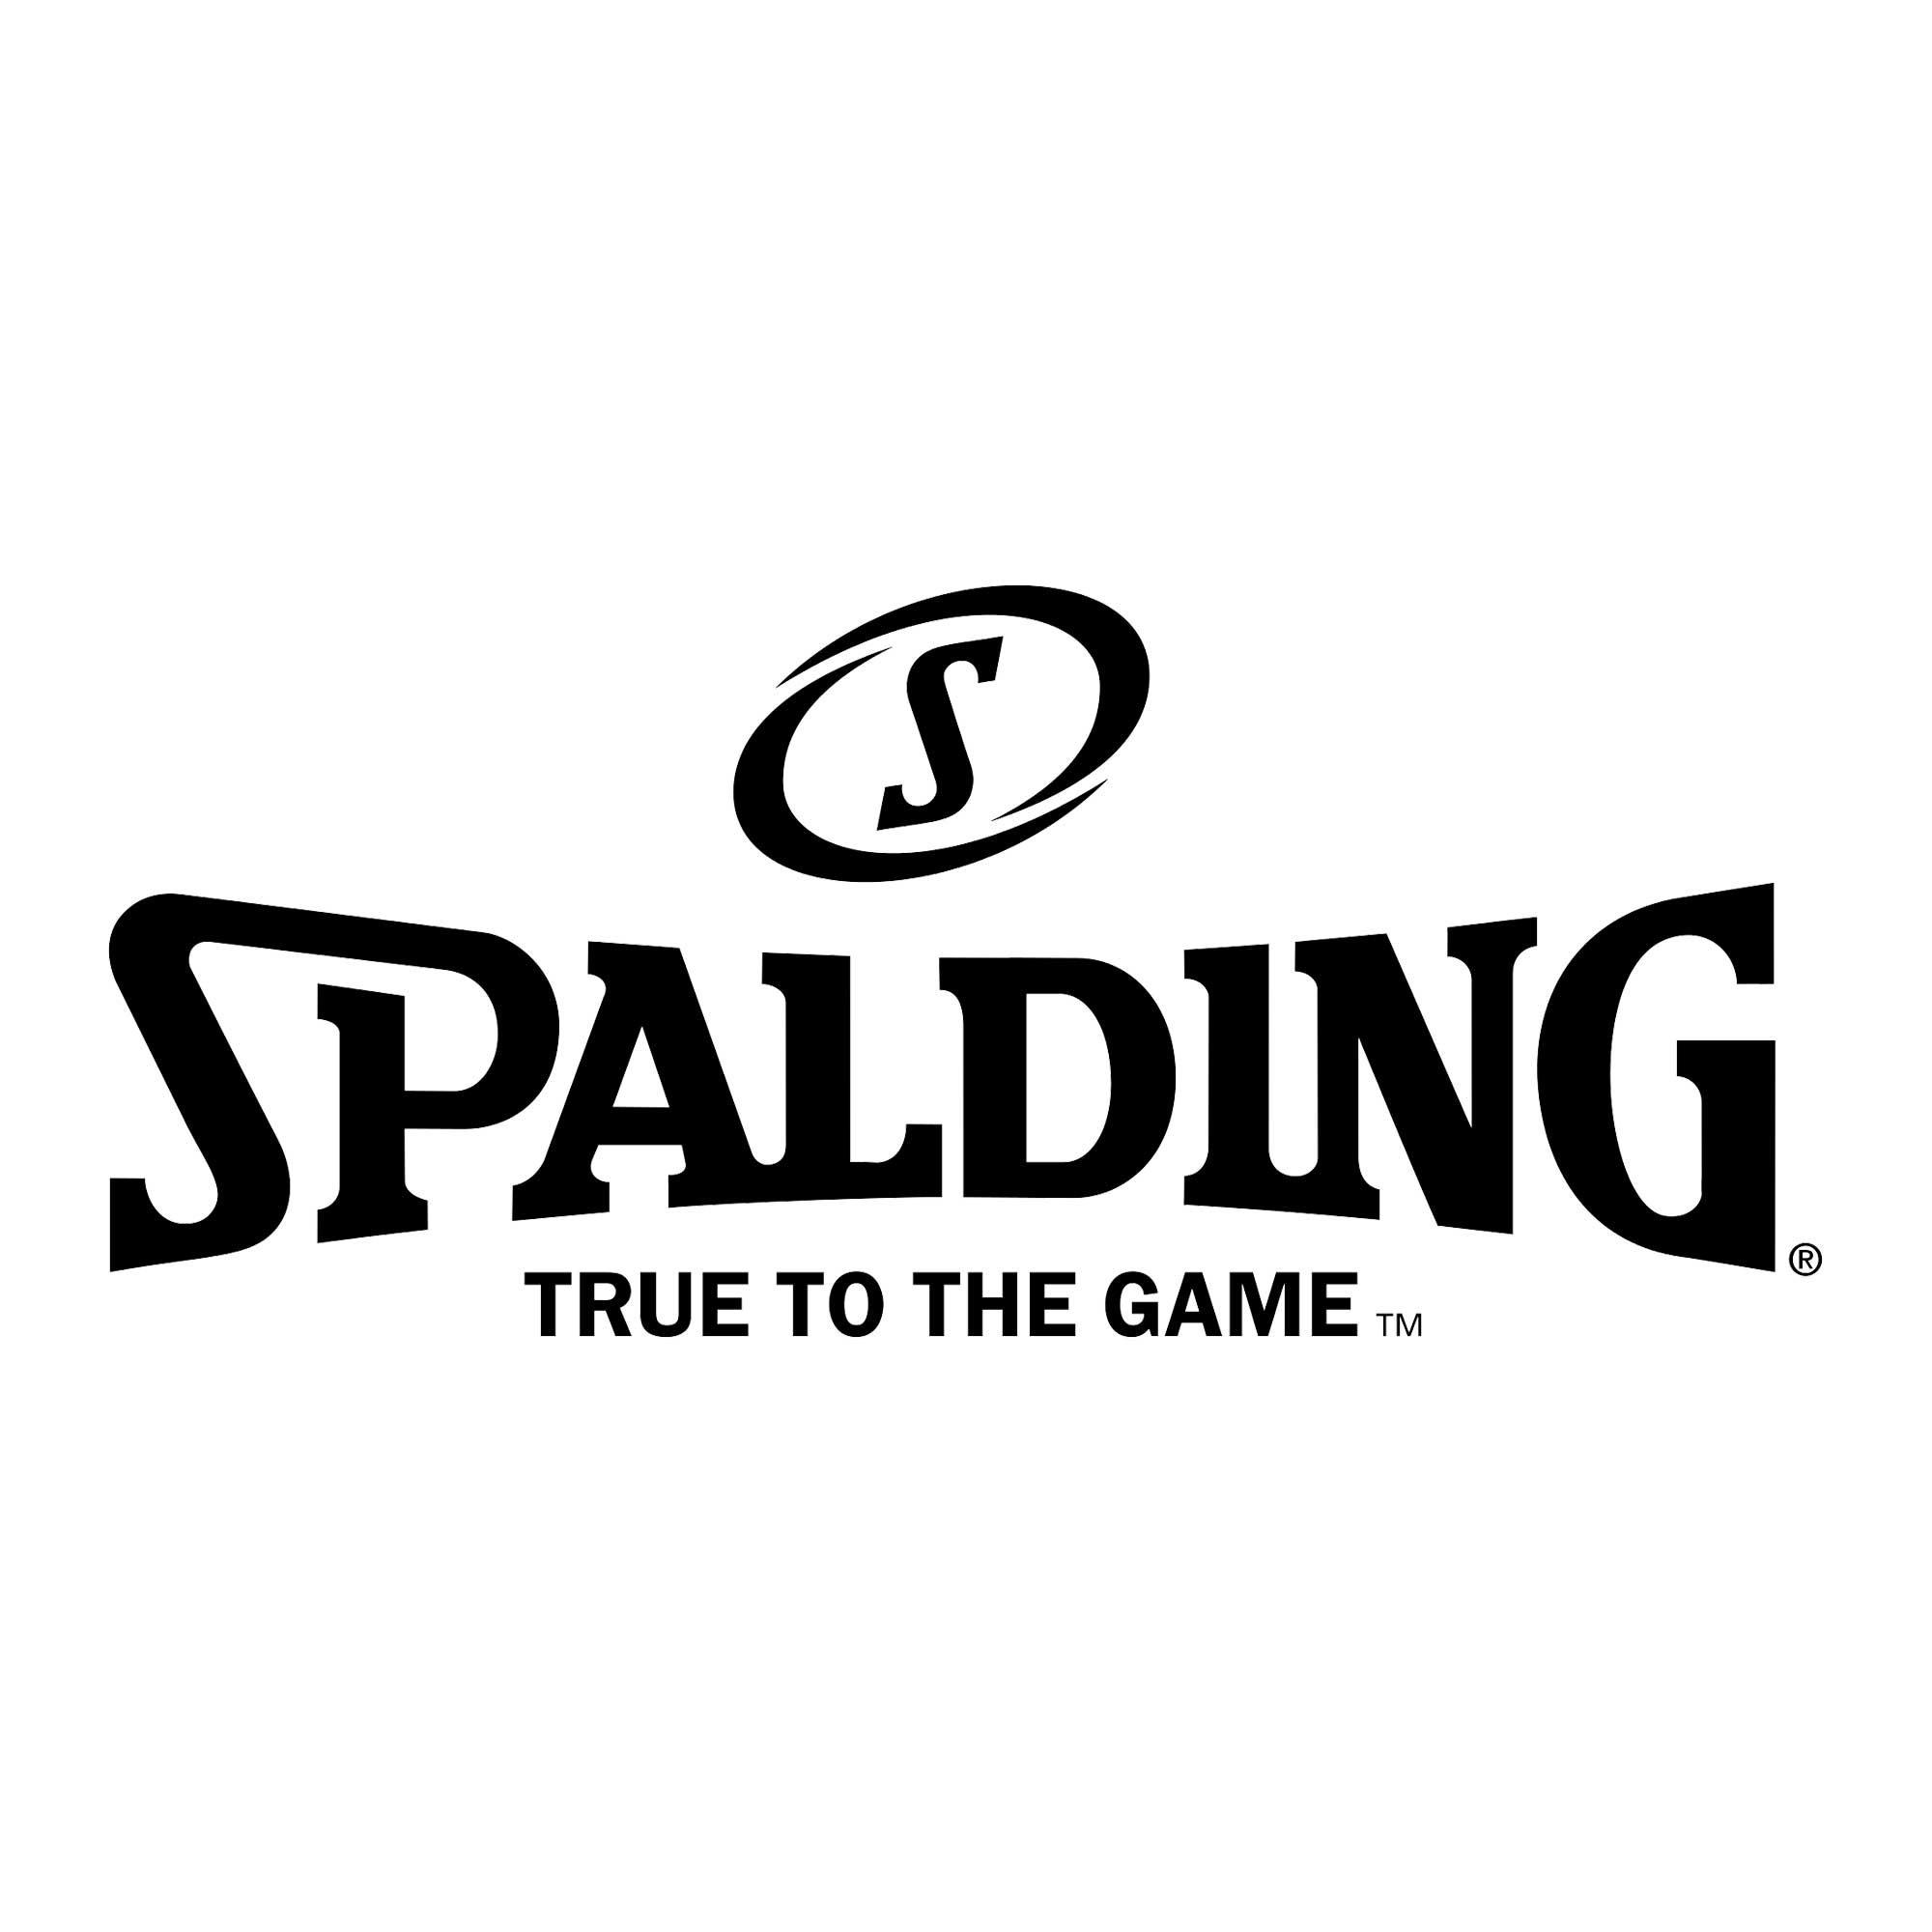 Spalding Logo